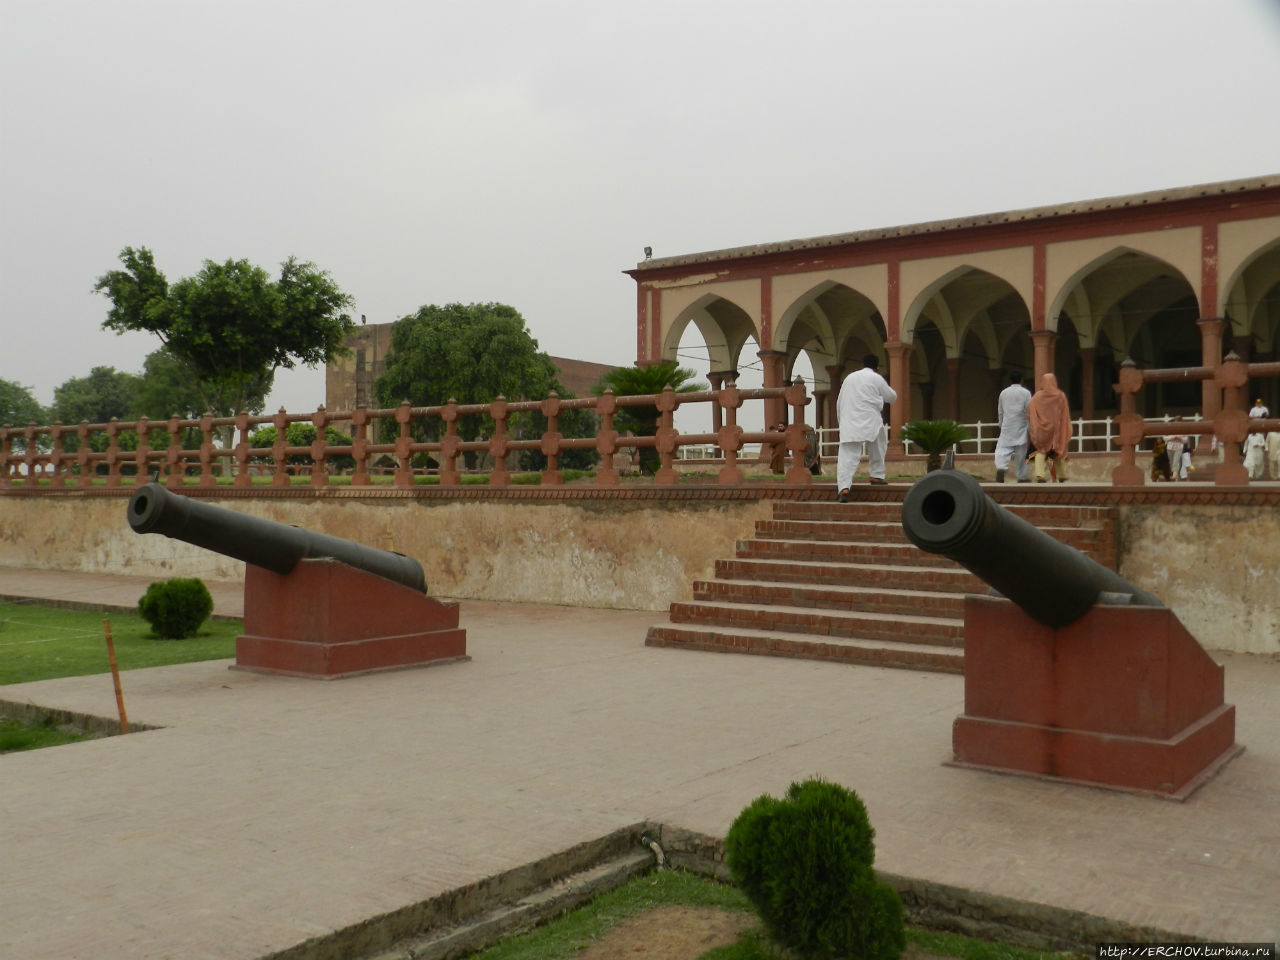 Пакистан. Ч — 4. Лахорский форт Лахор, Пакистан